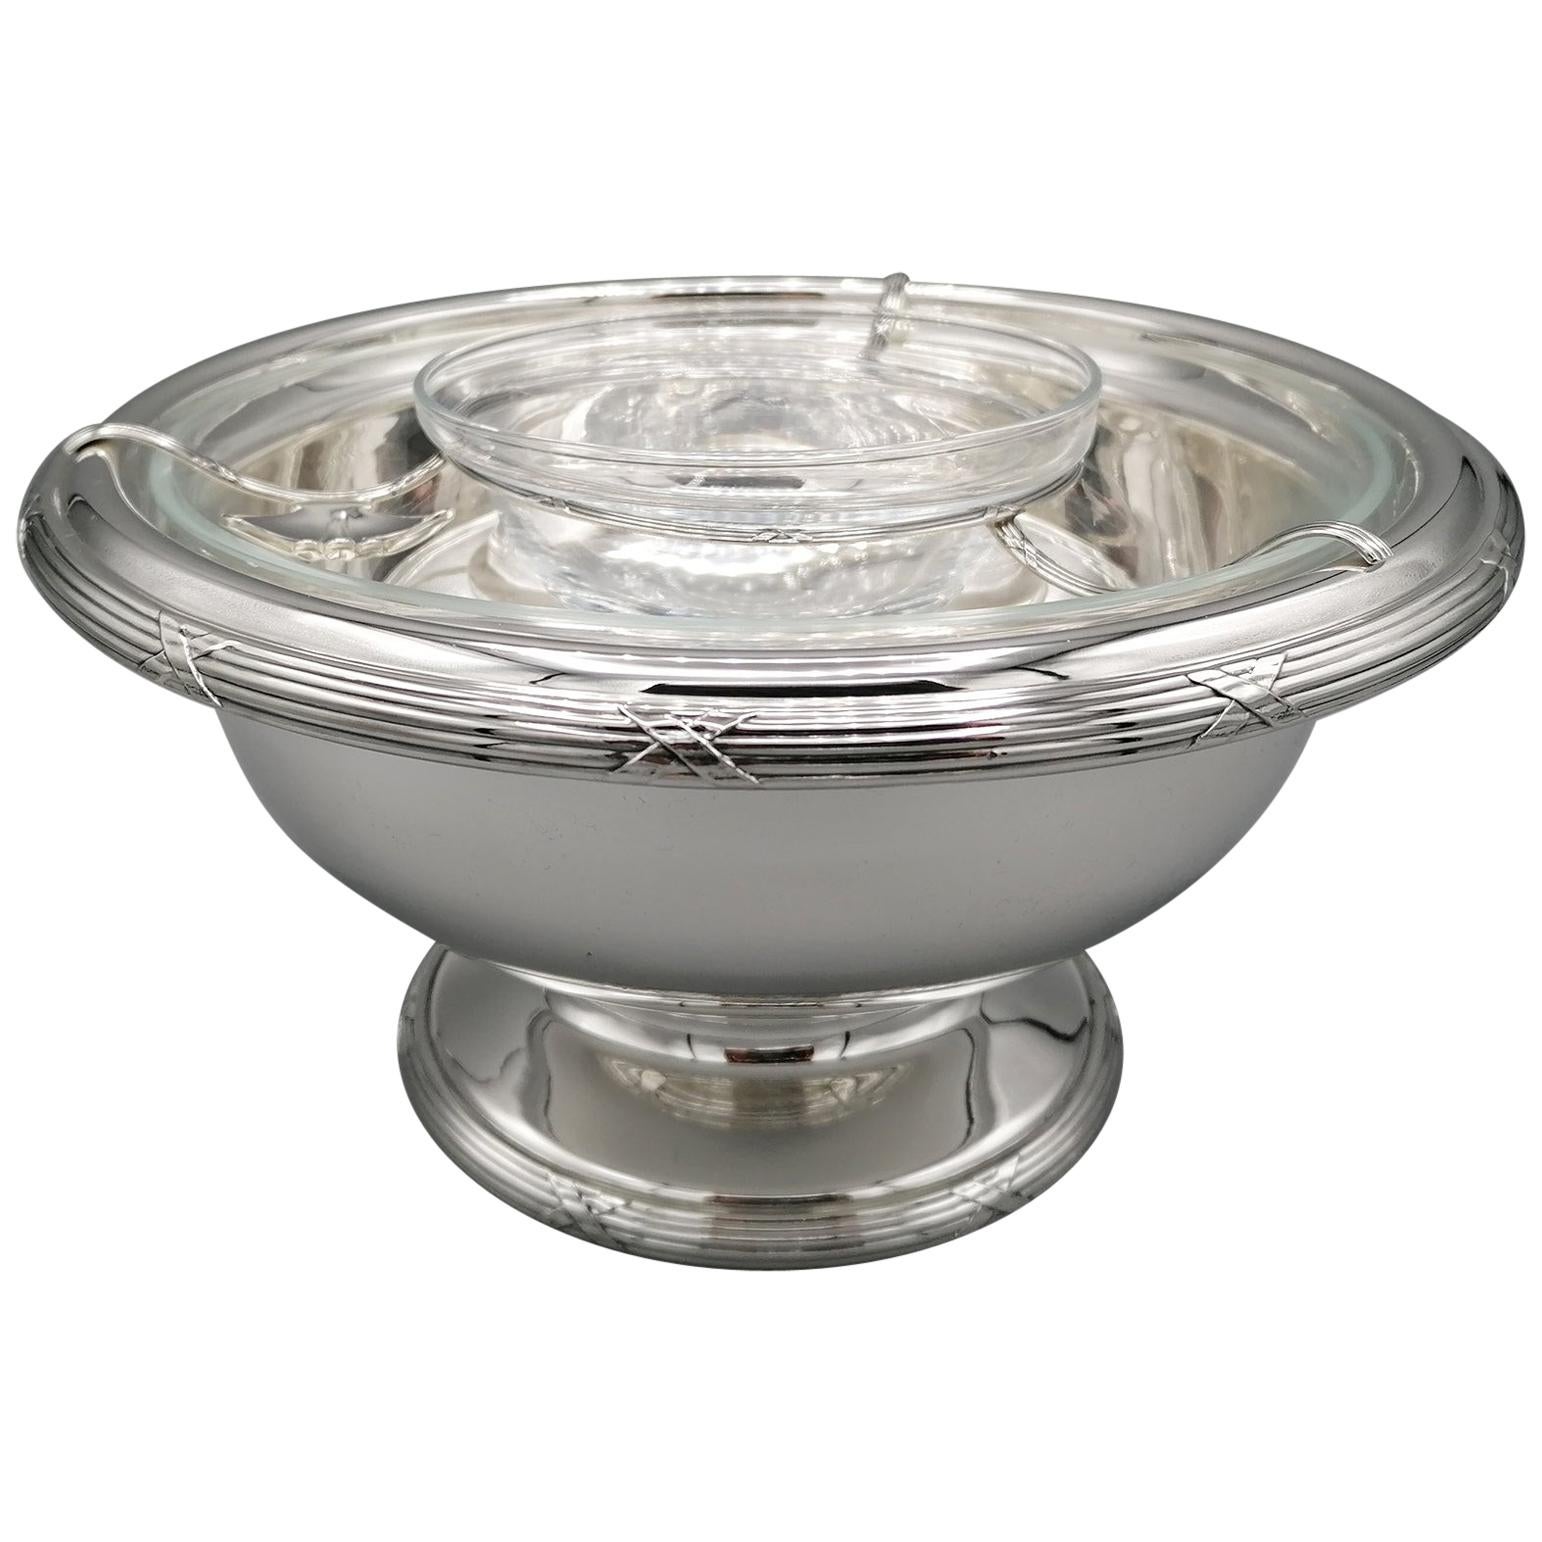 21st Century Italian Sterling Silver Gianmaria Buccellati Caviar Bowl For Sale